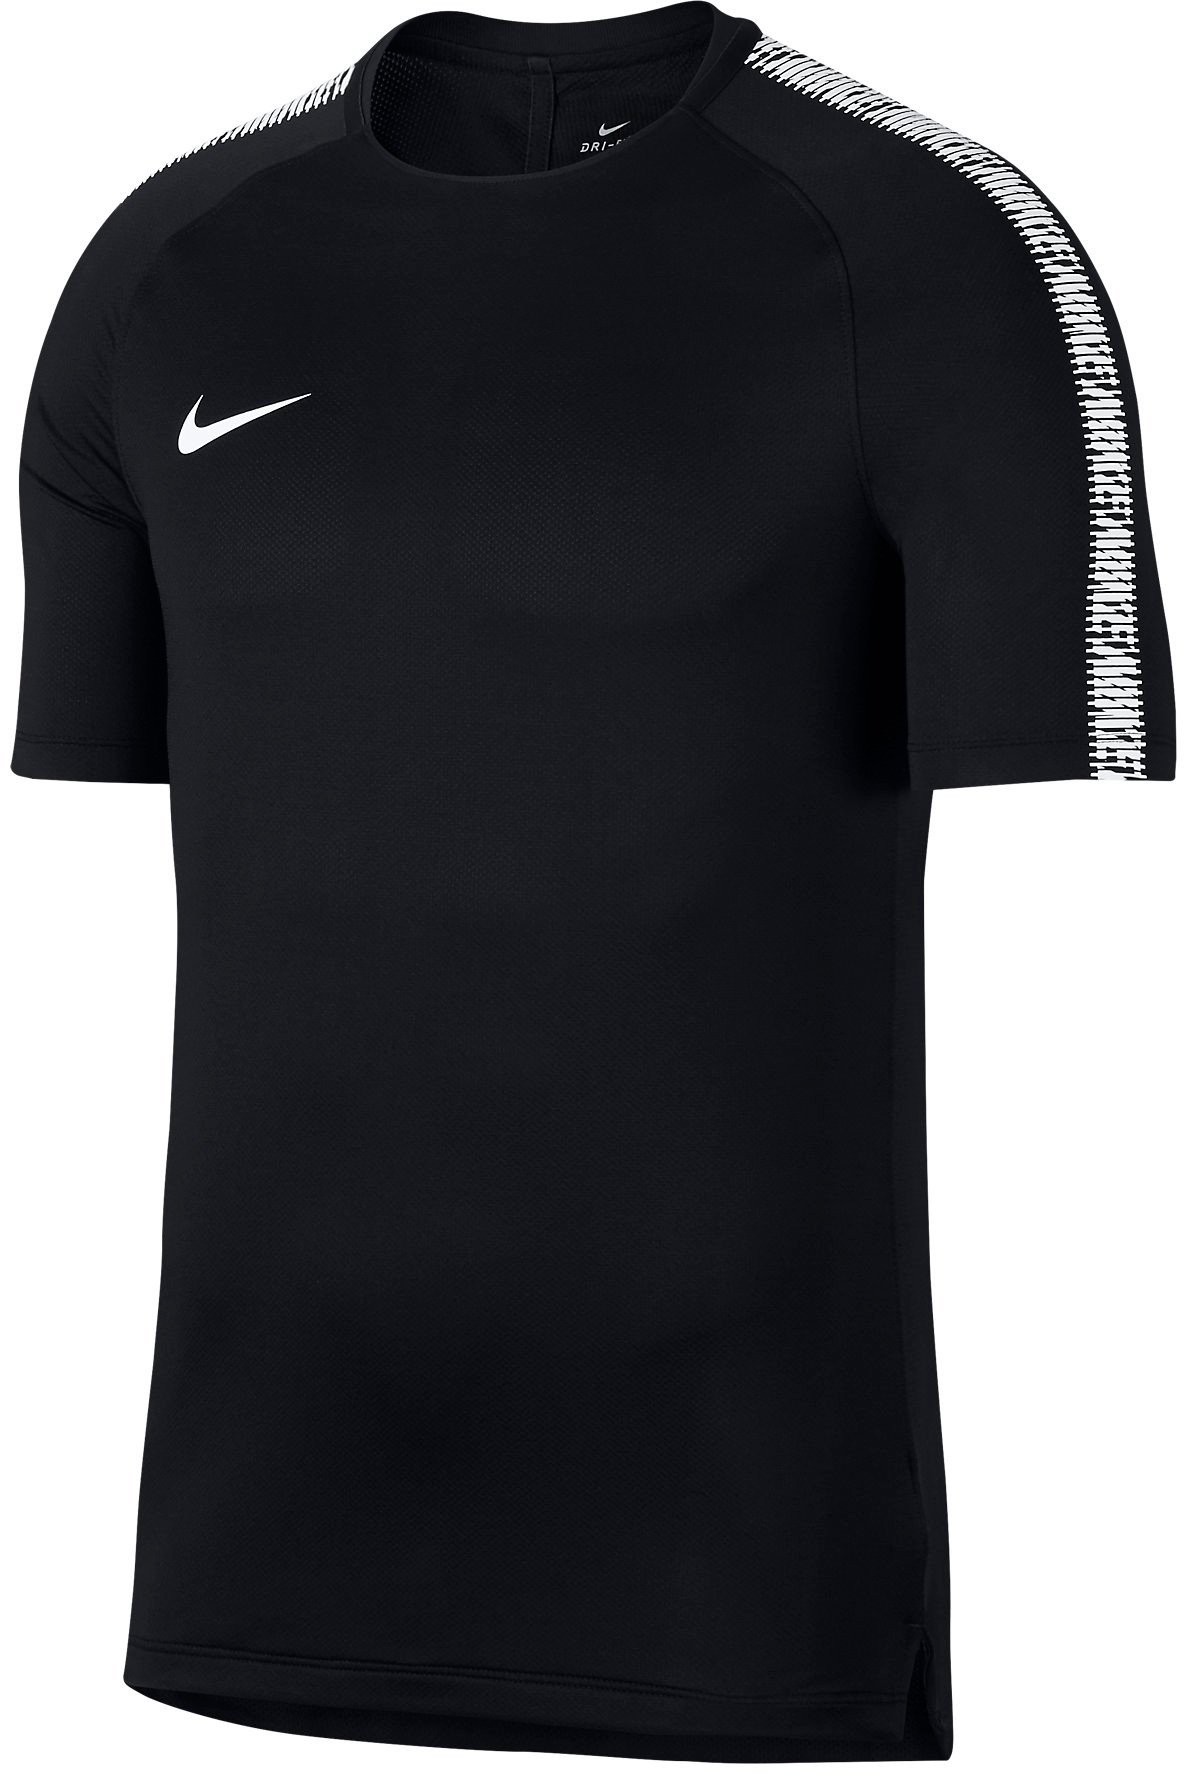 Pánský fotbalový top s krátkým rukávem Nike Breathe Squad